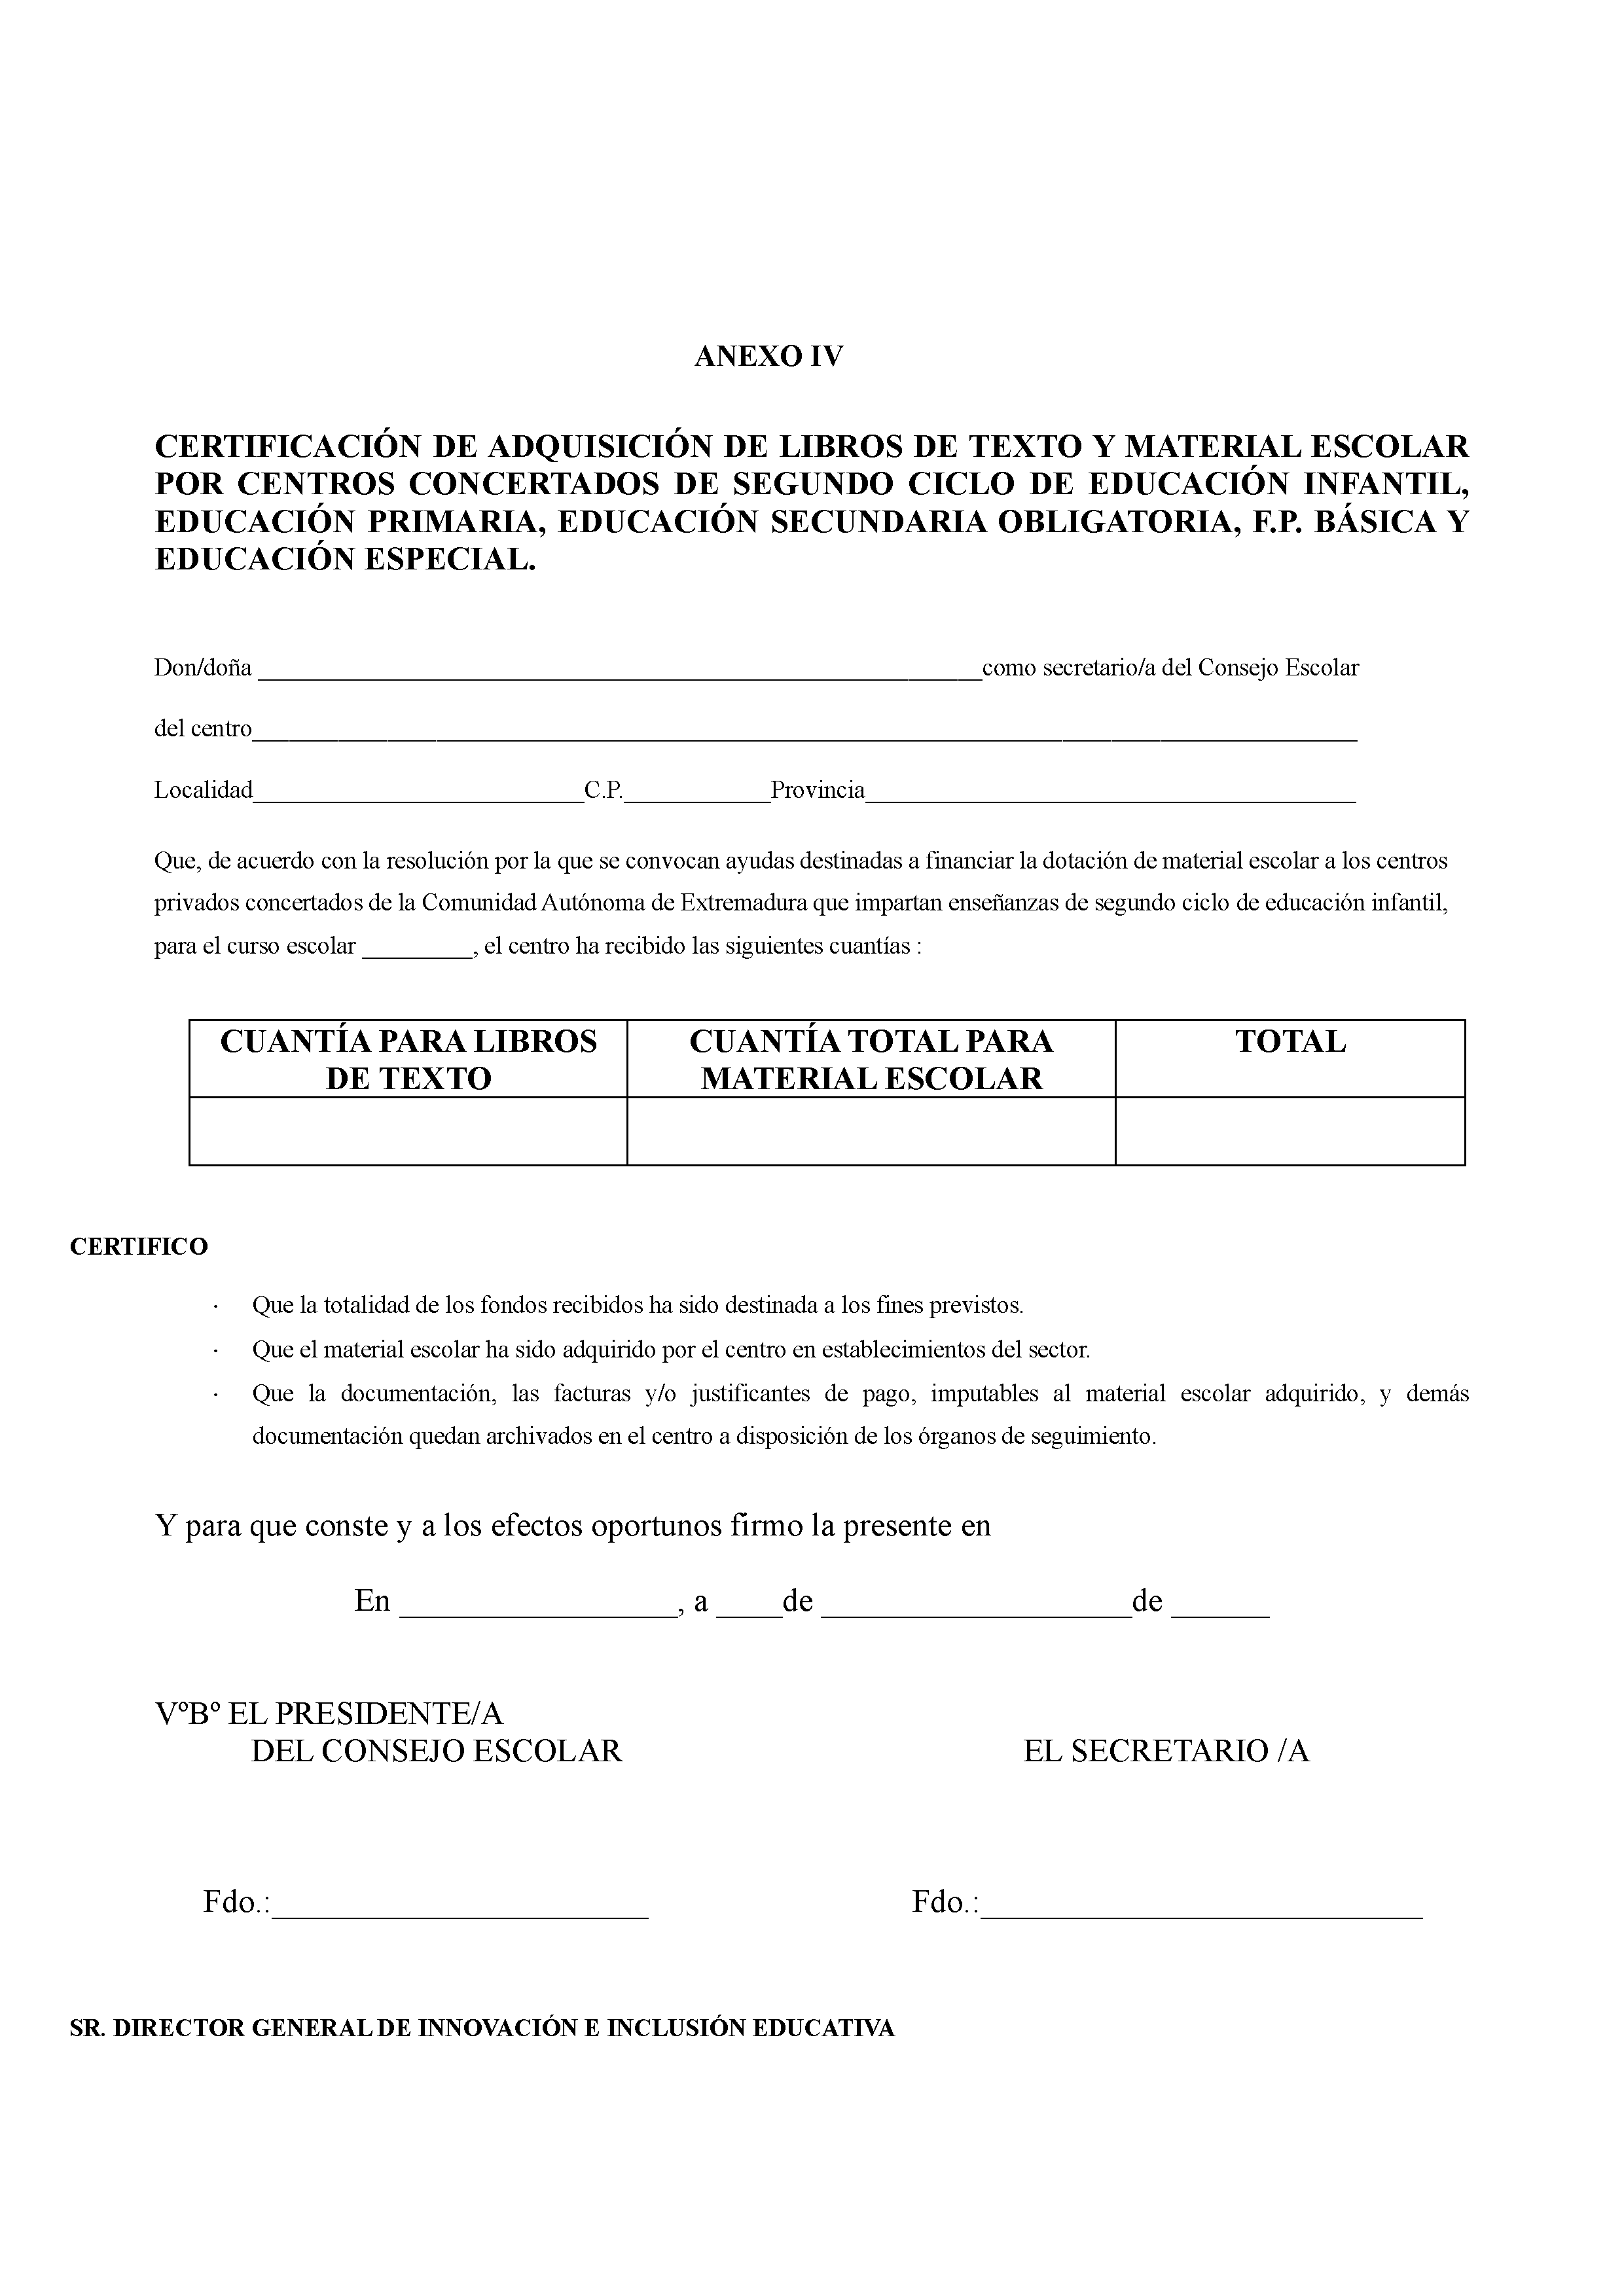 ANEXO IV CERTIFICACION DE ADQUISICION DE LIBROS DE TEXTO Y MATERIAL ESCOLAR Pag 6